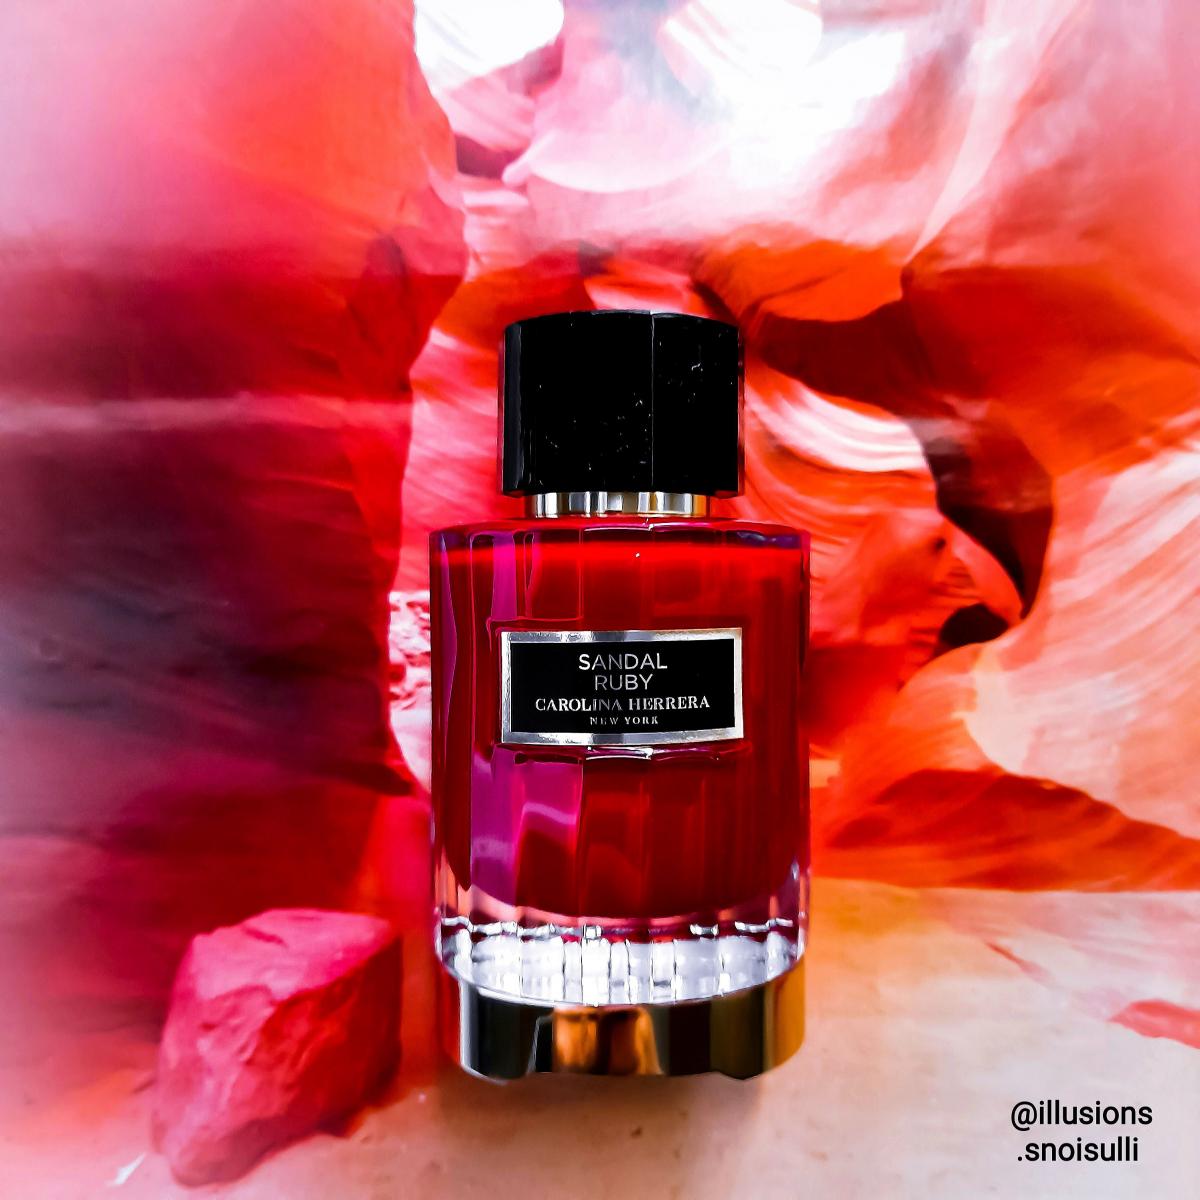 Sandal Ruby Carolina Herrera perfume - a fragrance for women and men 2019